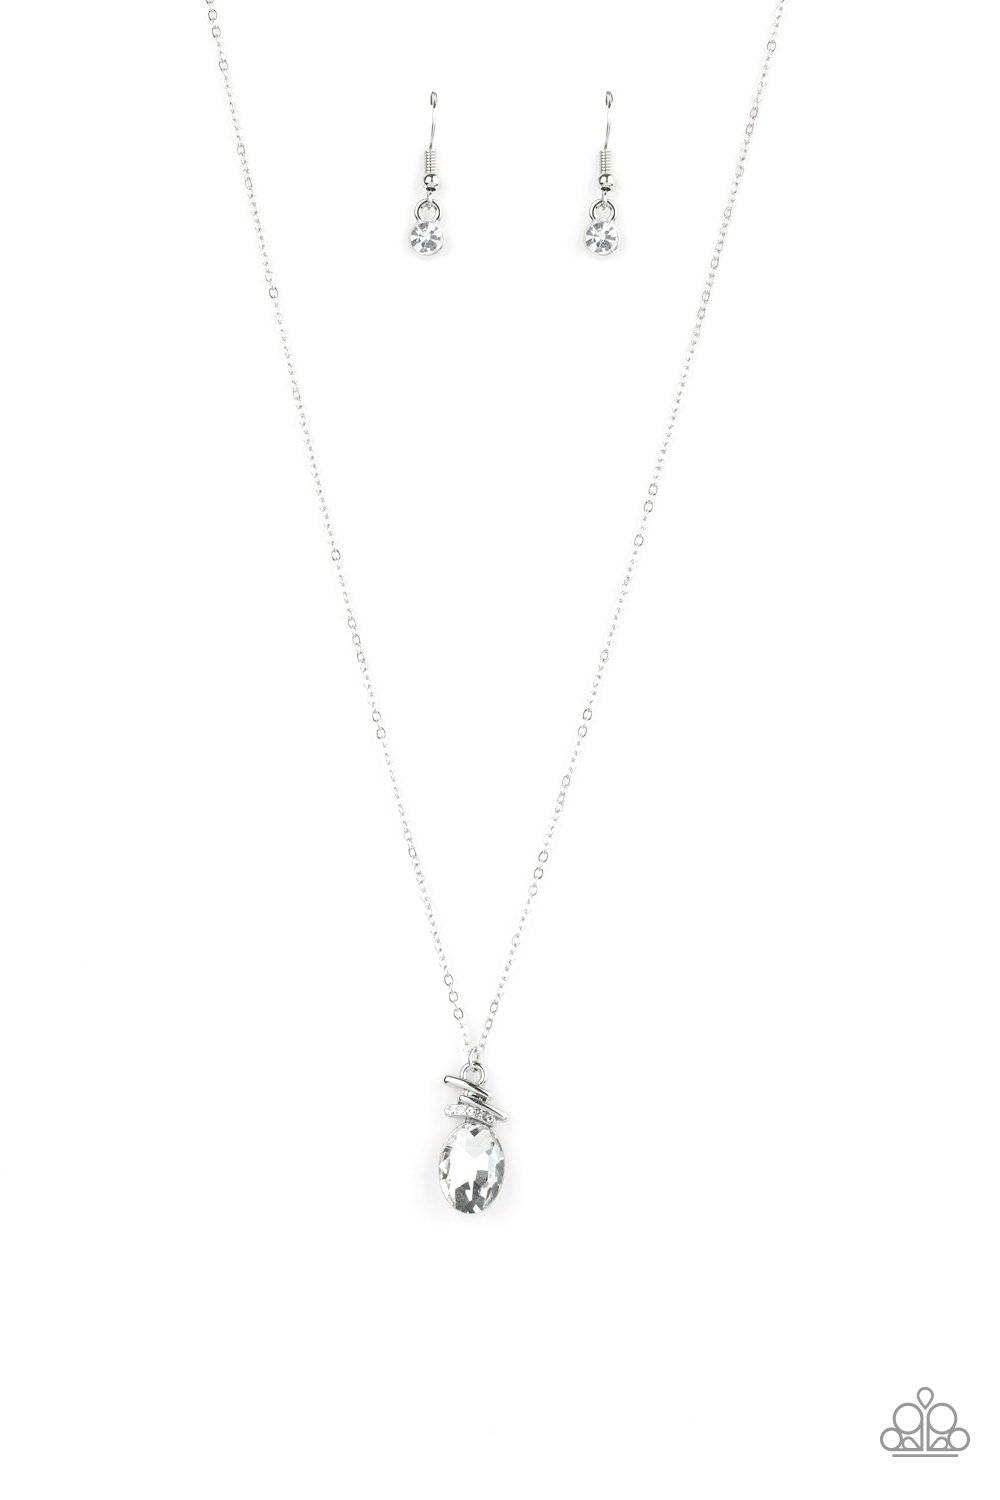 Diamonds For Days - White Rhinestone Necklace - Paparazzi Accessories - GlaMarous Titi Jewels